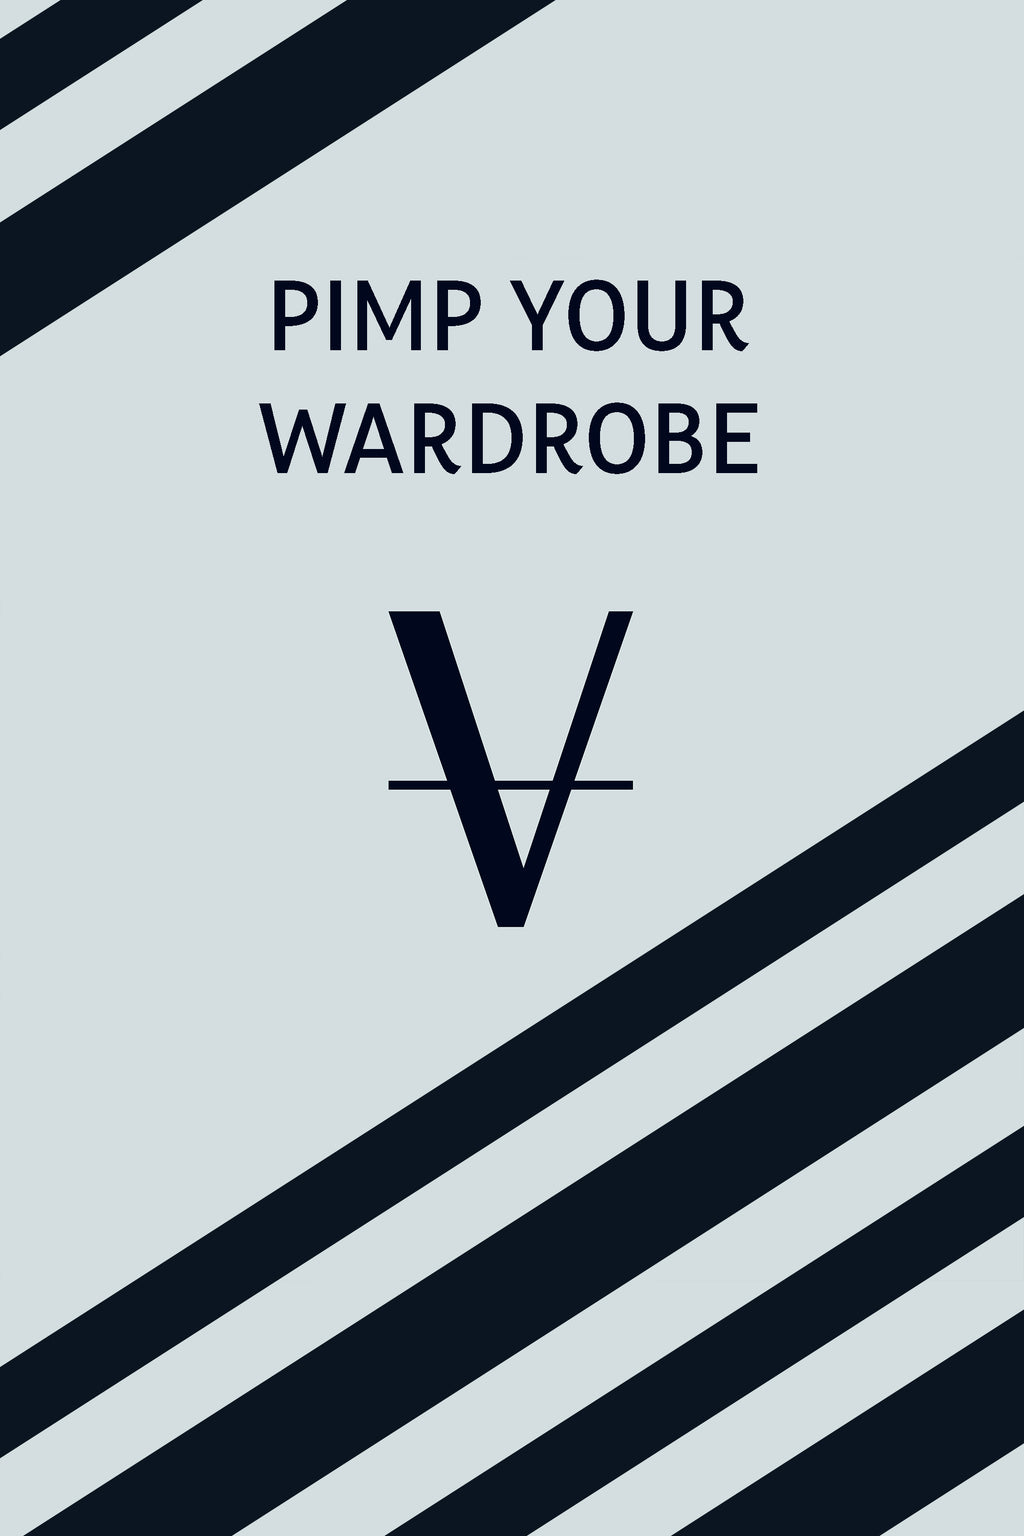 Pimp Your Wardrobe